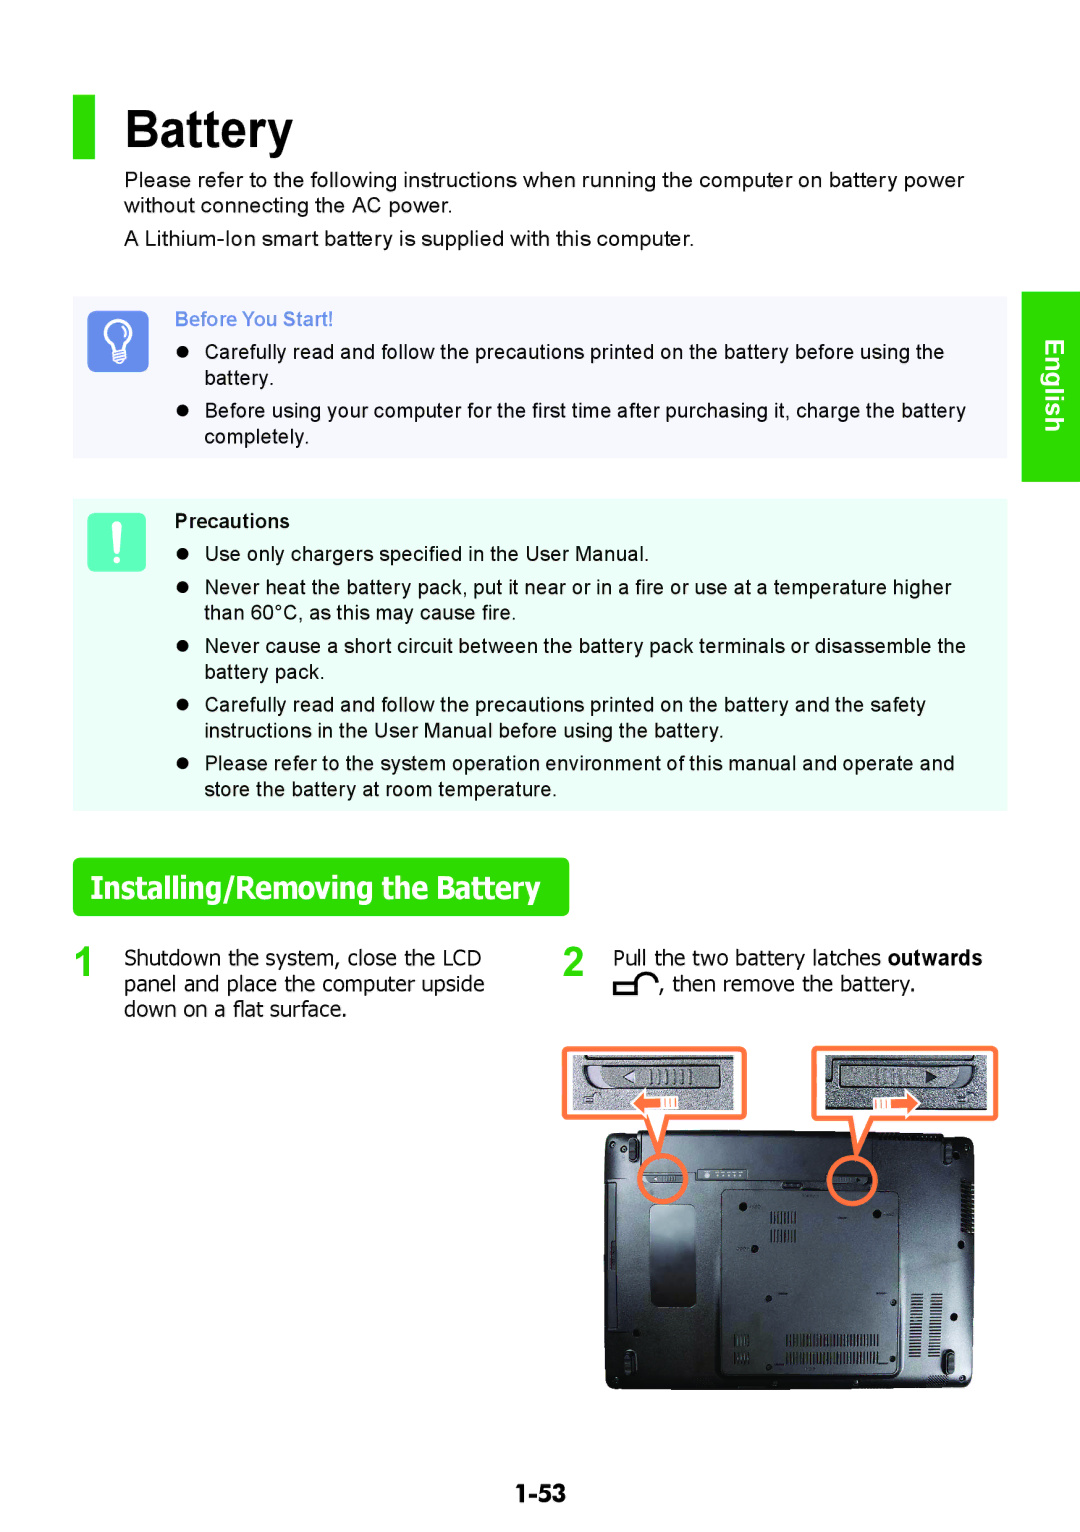 Samsung NP-RV508-A01EE, NP-RV508-A01RU, NP-RV408-A01RU, NP-RV508-A02RU manual Installing/Removing the Battery, Precautions 